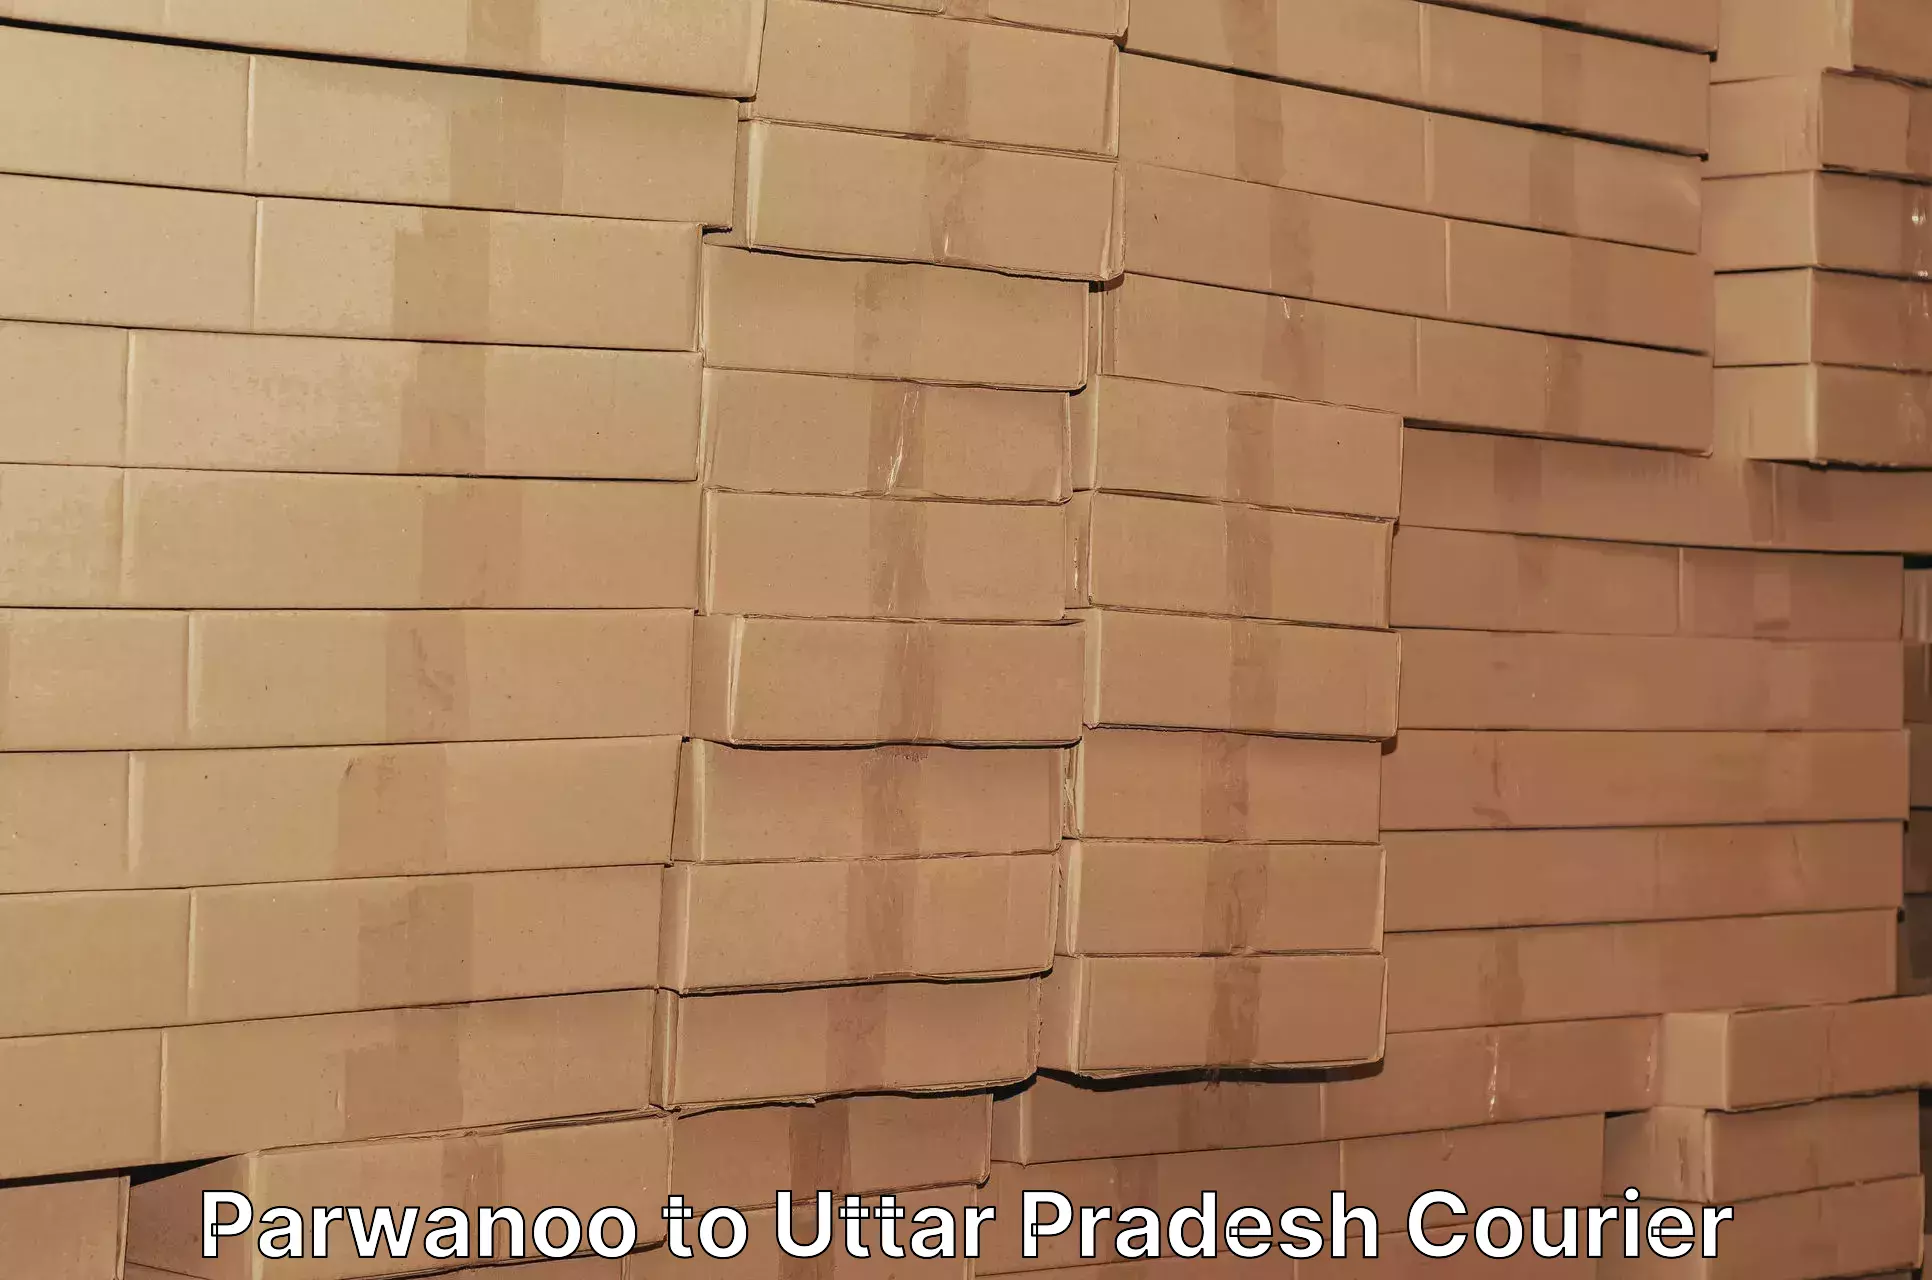 Modern courier technology Parwanoo to Varanasi